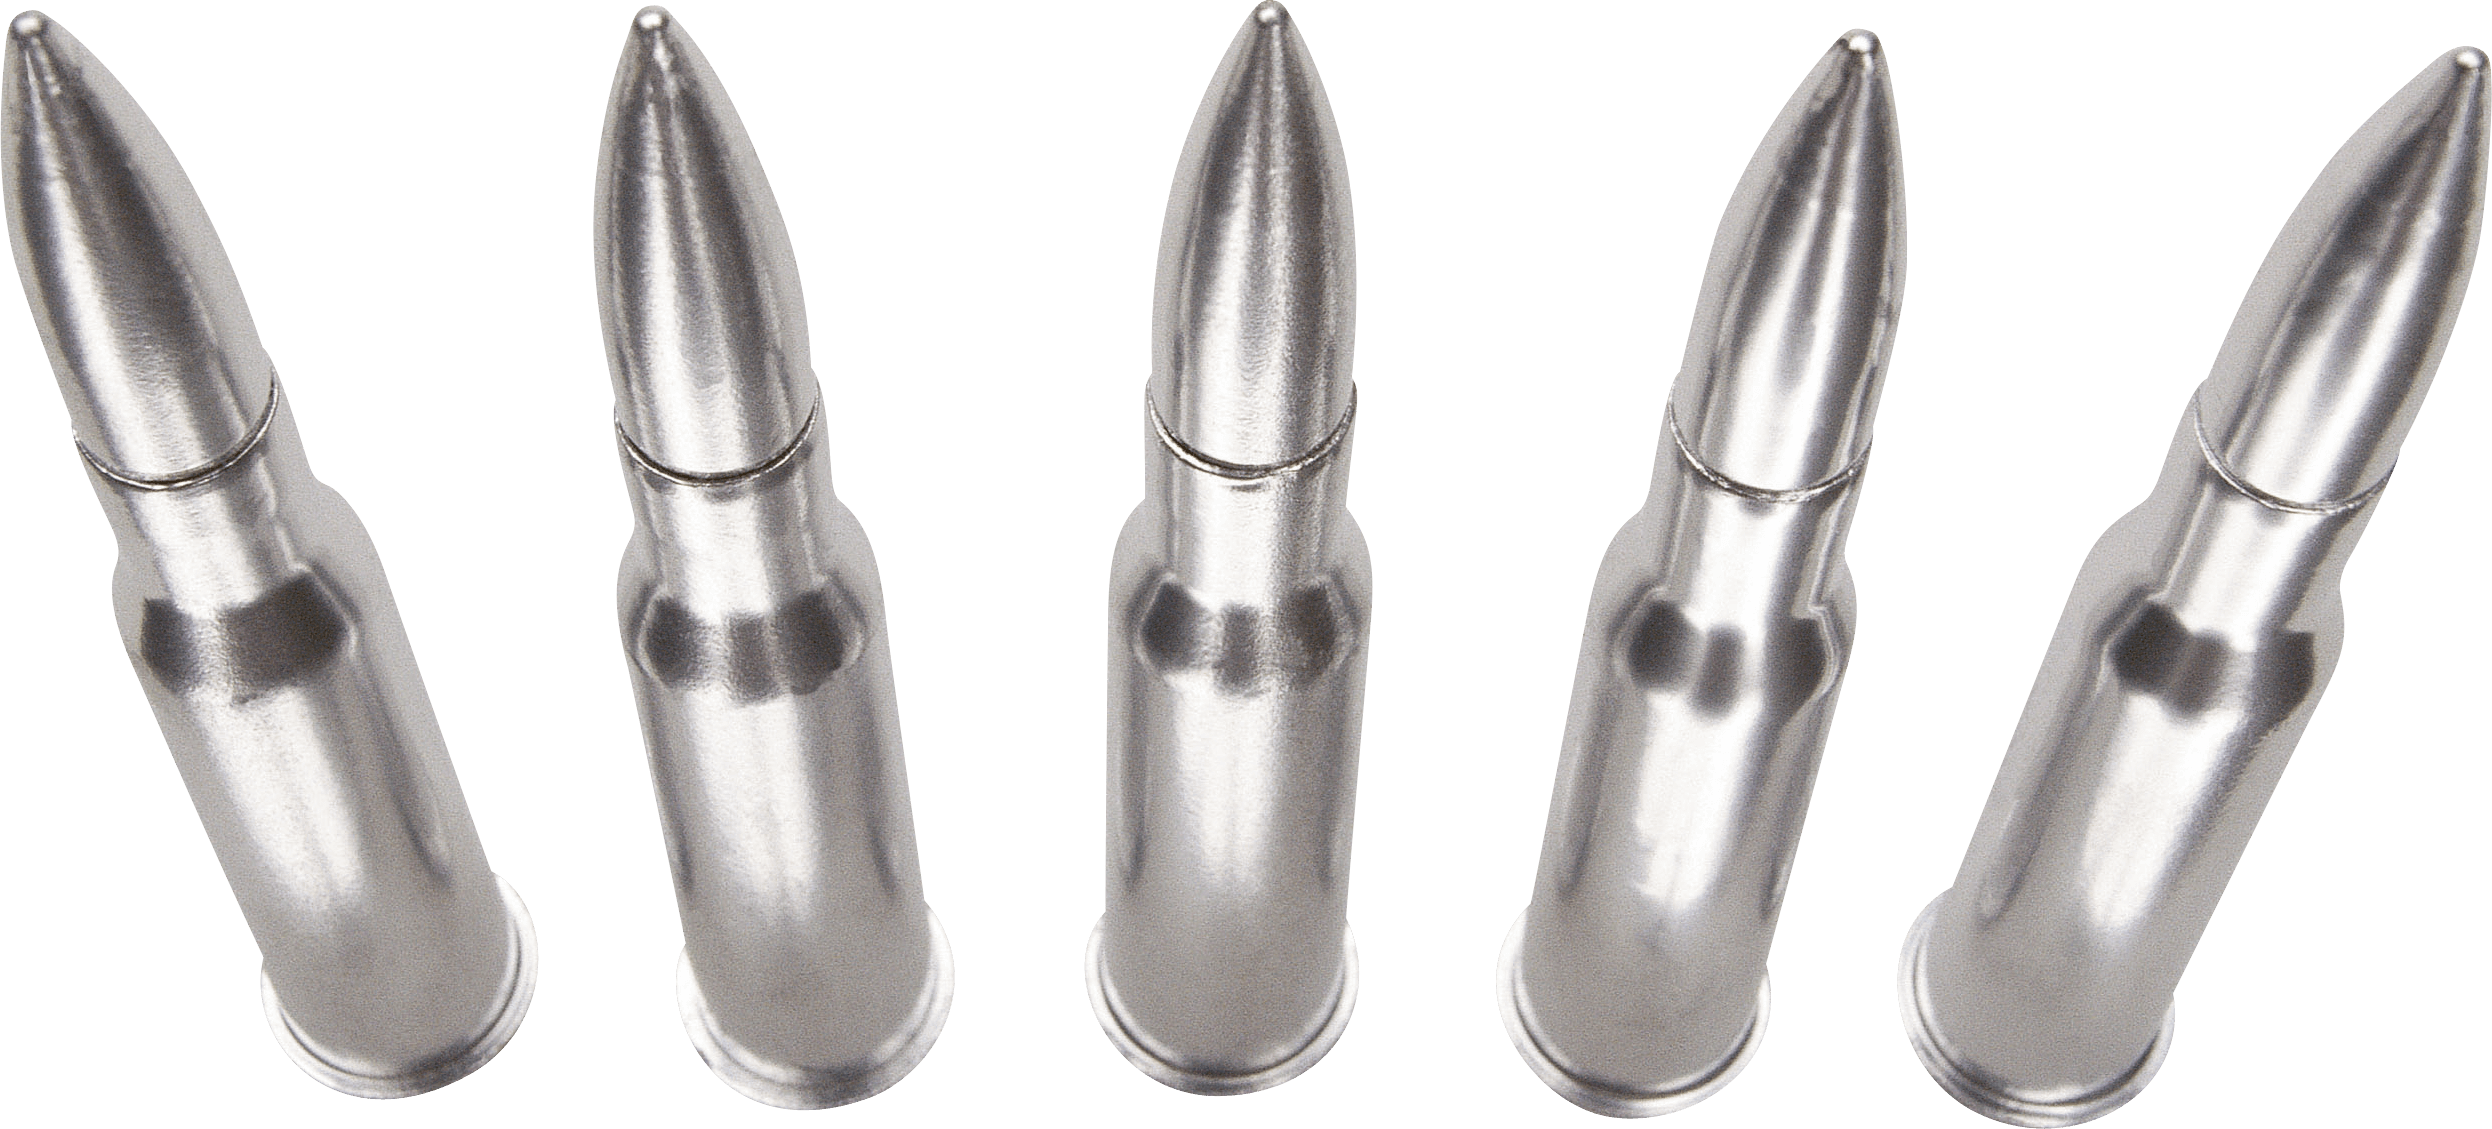 Slug Weapon Firings Ballistics Love PNG